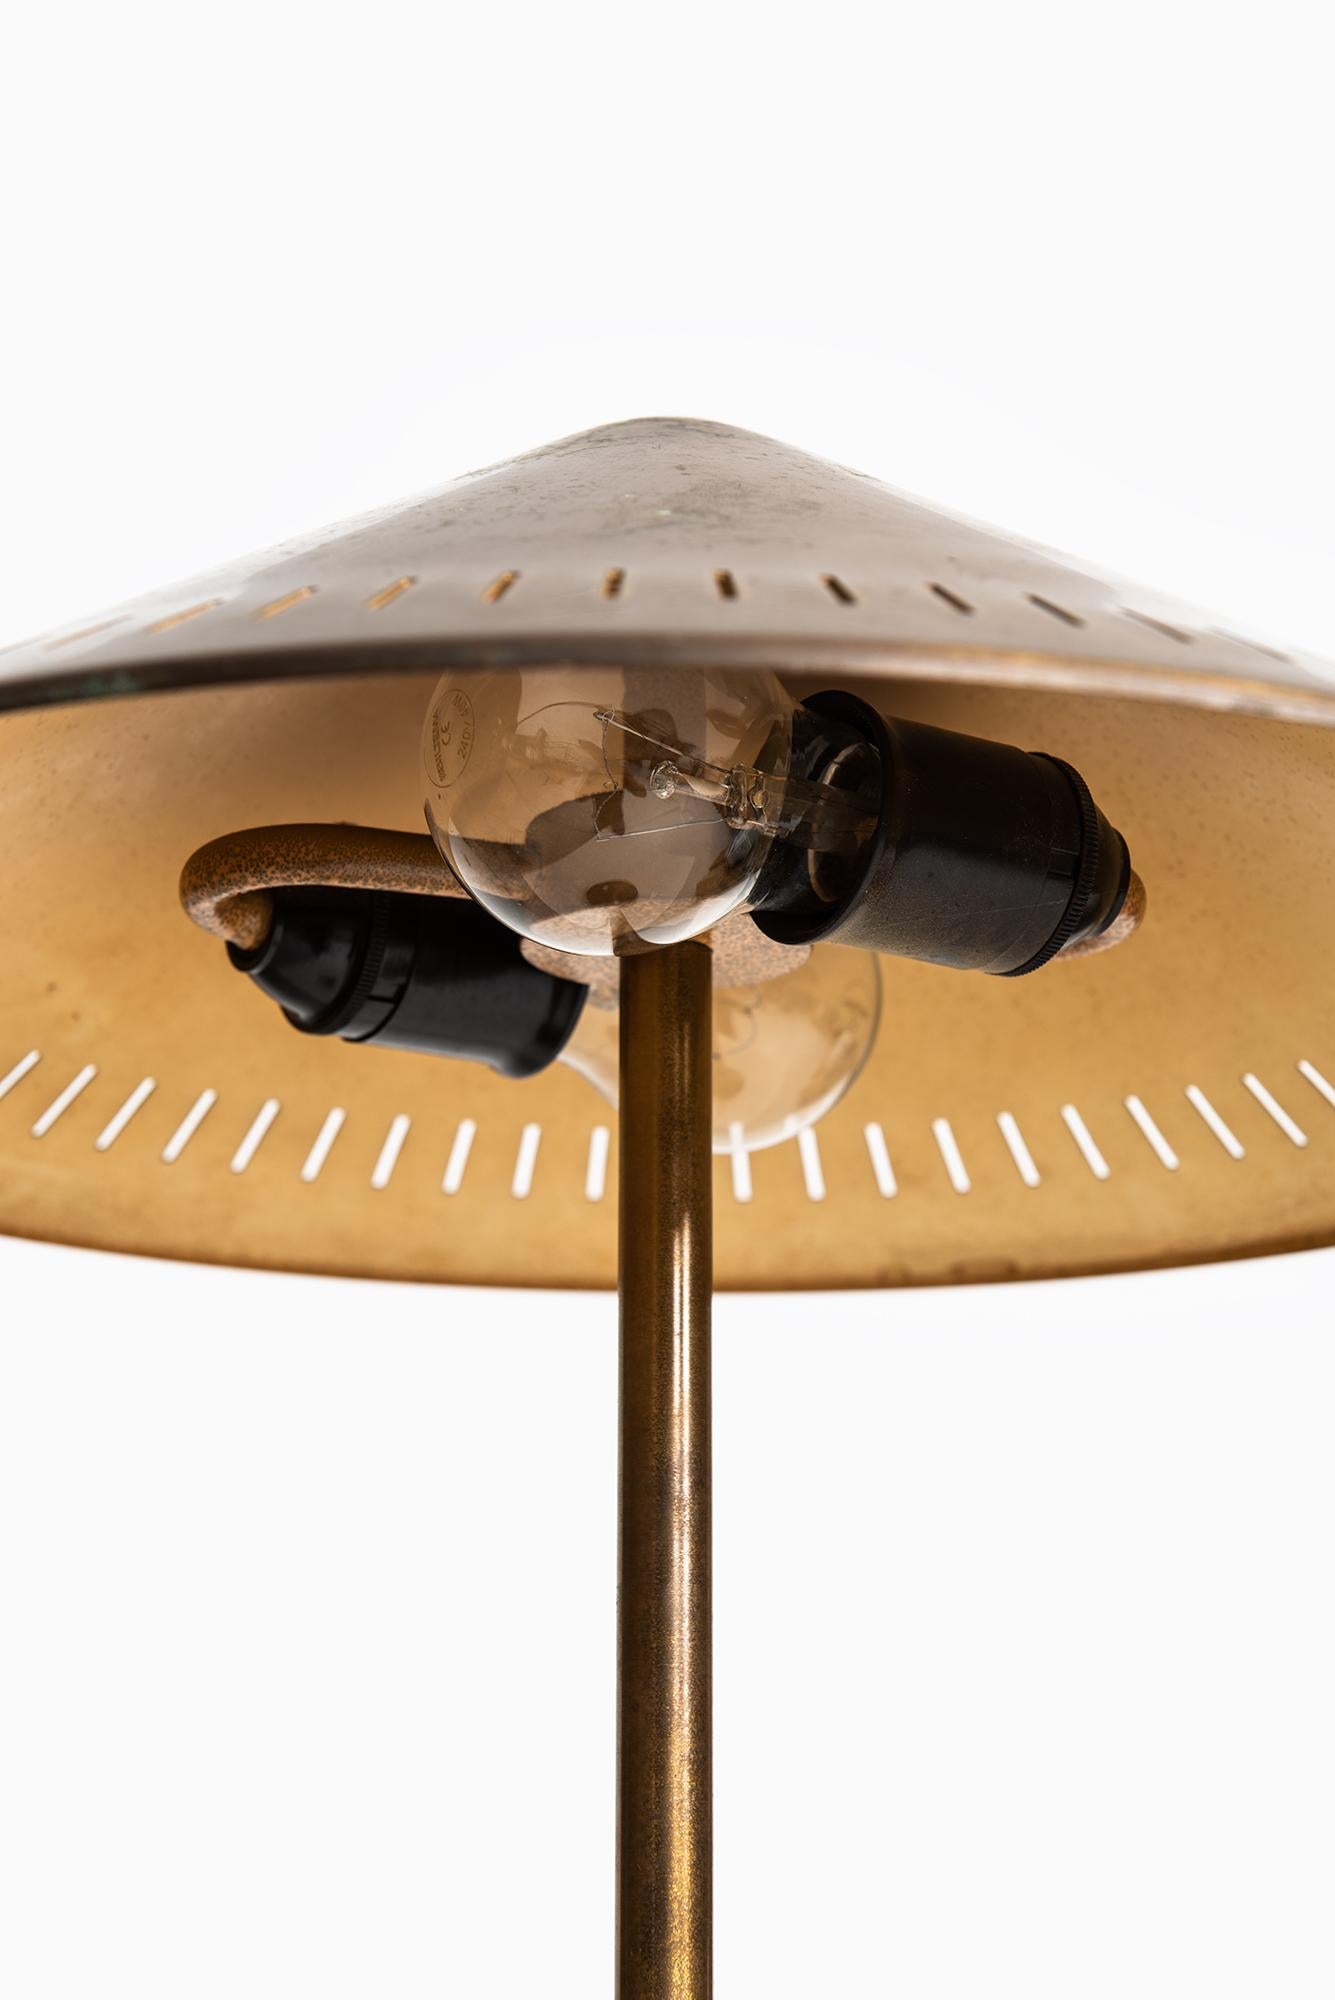 Scandinavian Modern Bent Karlby Table Lamp Produced by Lyfa in Denmark